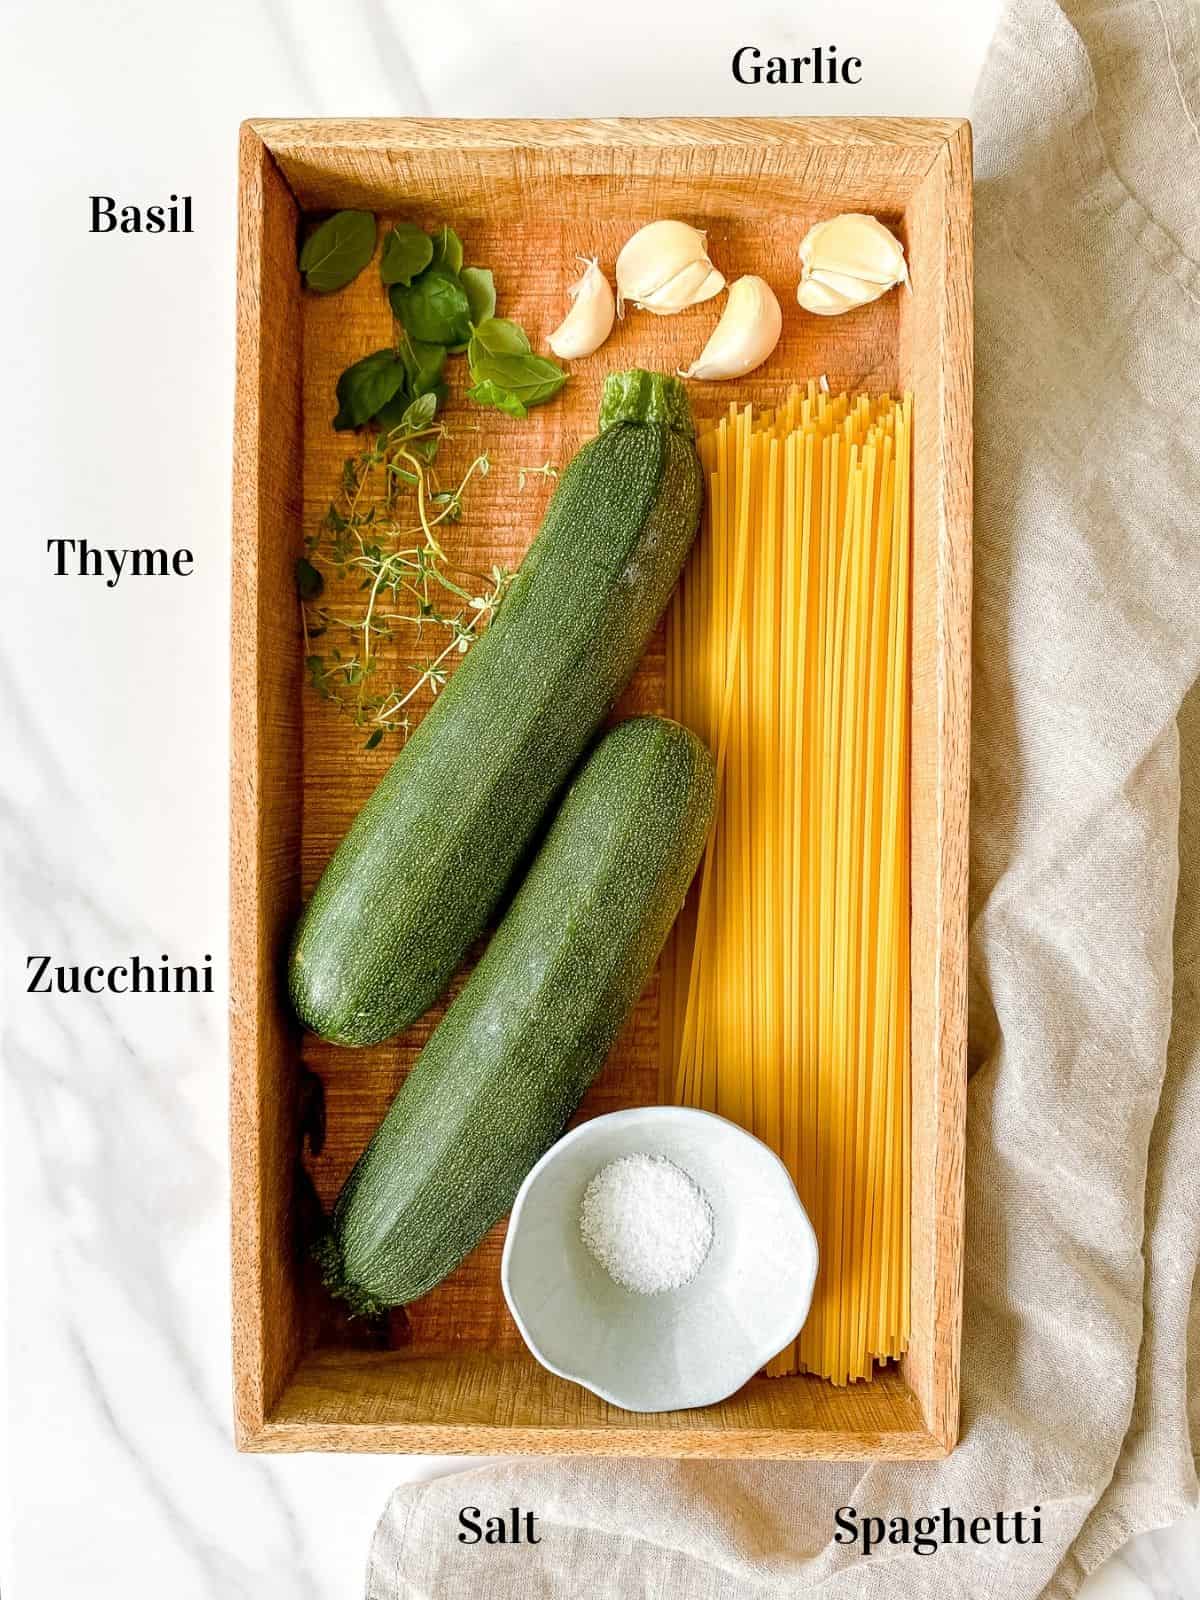 wooden box with zucchini, spaghetti, salt, garlic, basil and thyme in it.